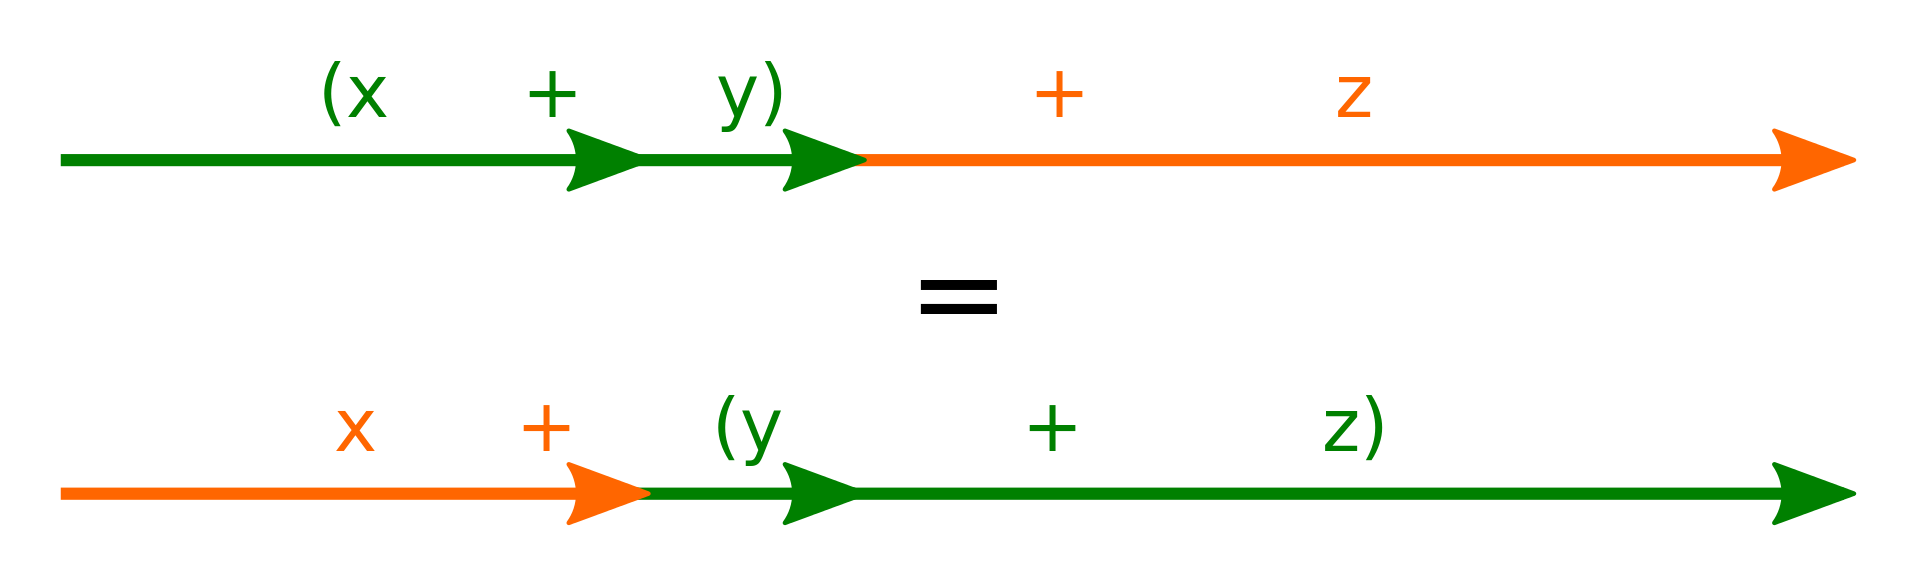 Representation of an associative mathematical operation